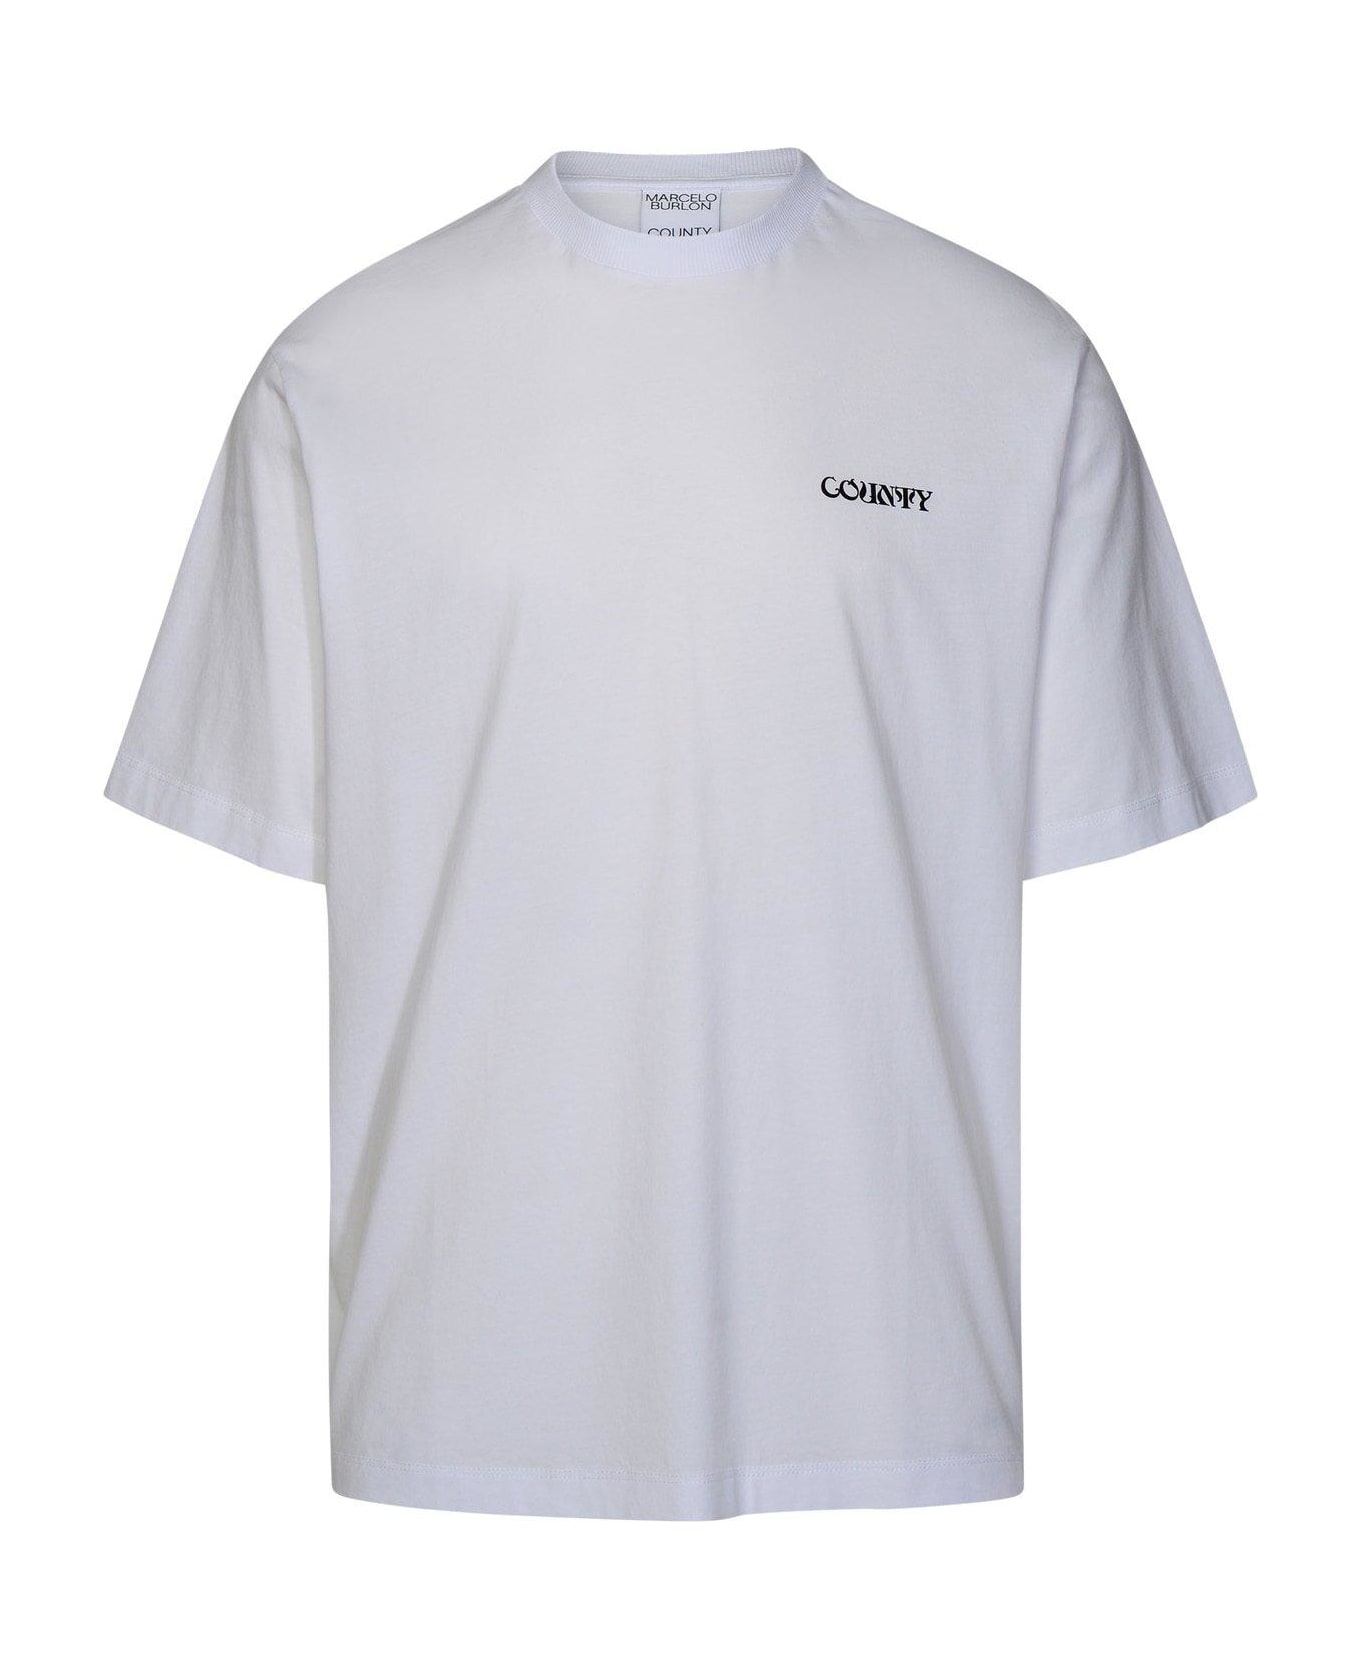 Marcelo Burlon County Printed Crewneck T-shirt - Bianco